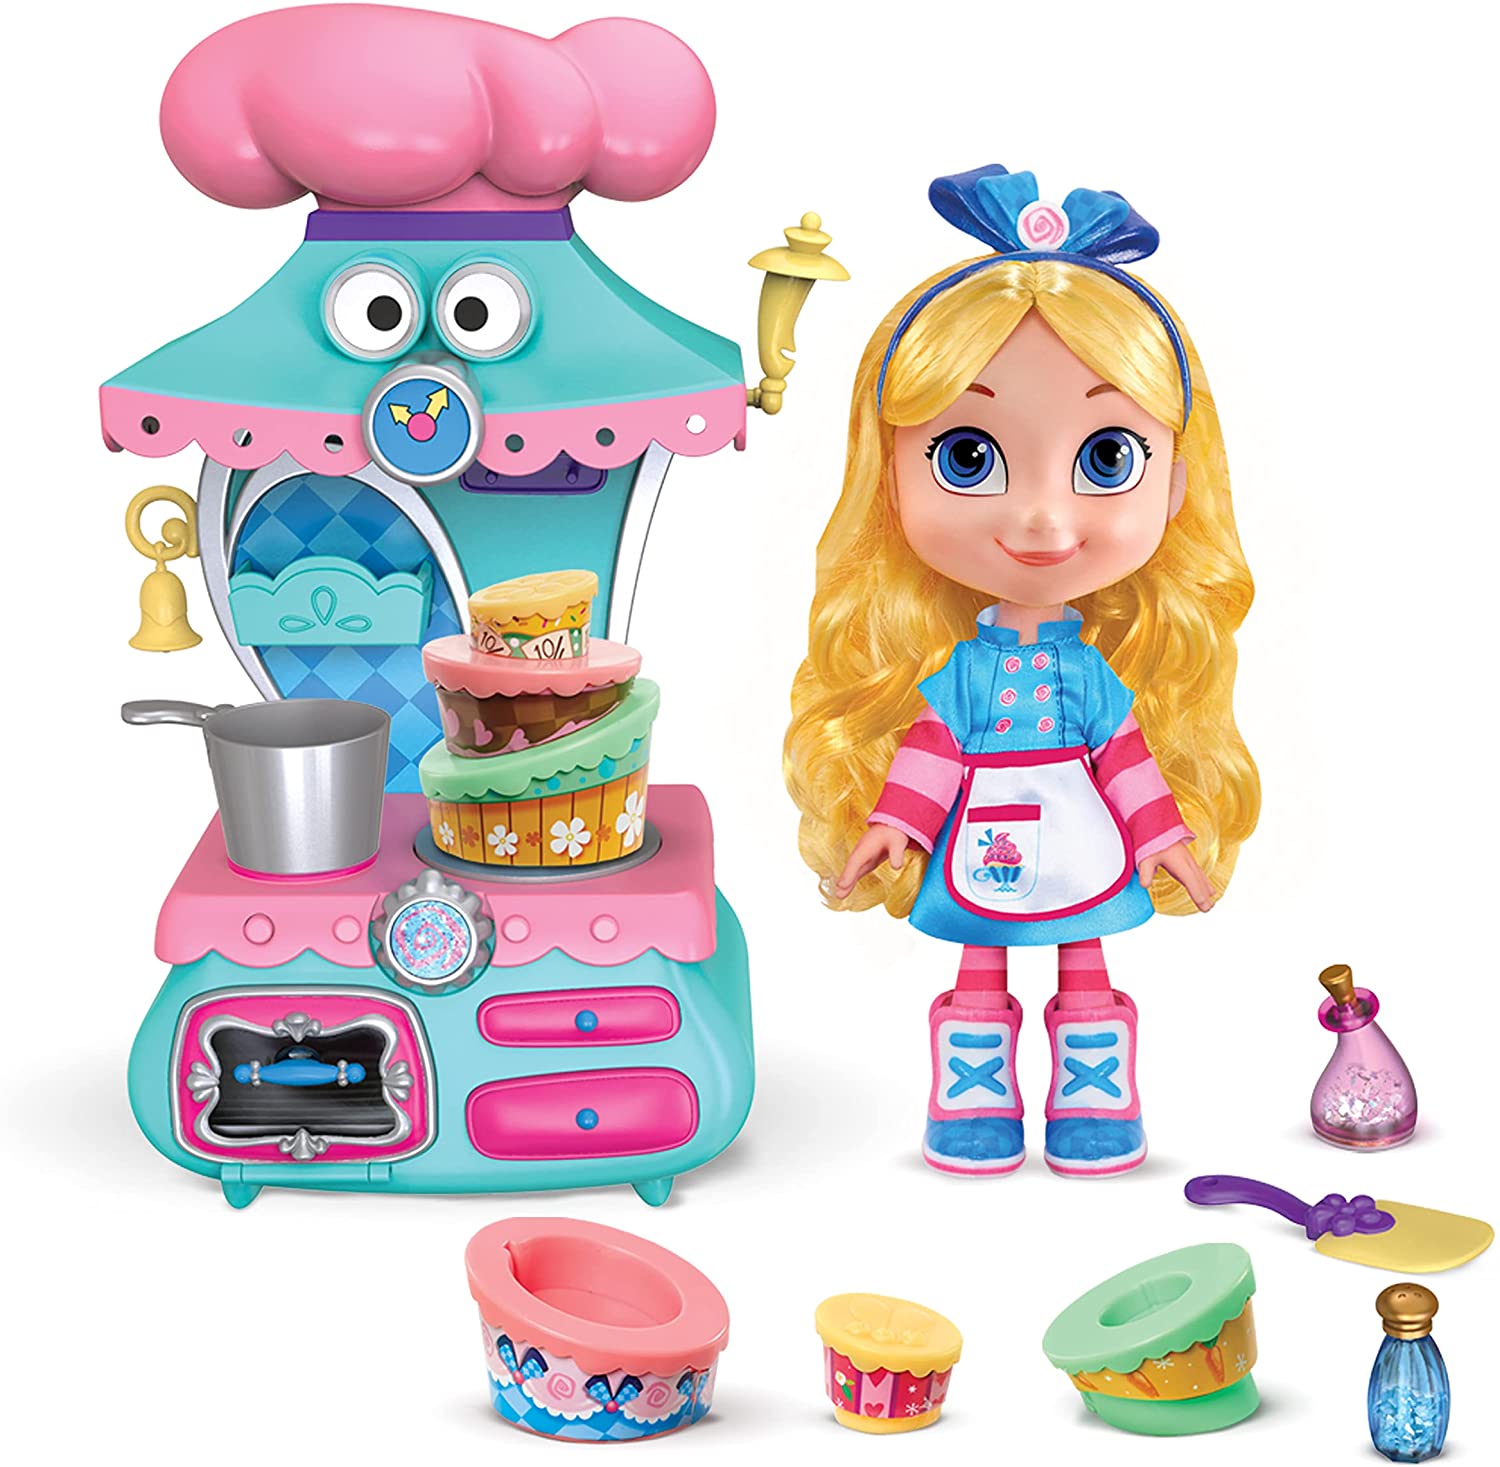 Buy Alice's Wonderland Bakery Friends Set, 6 Piece